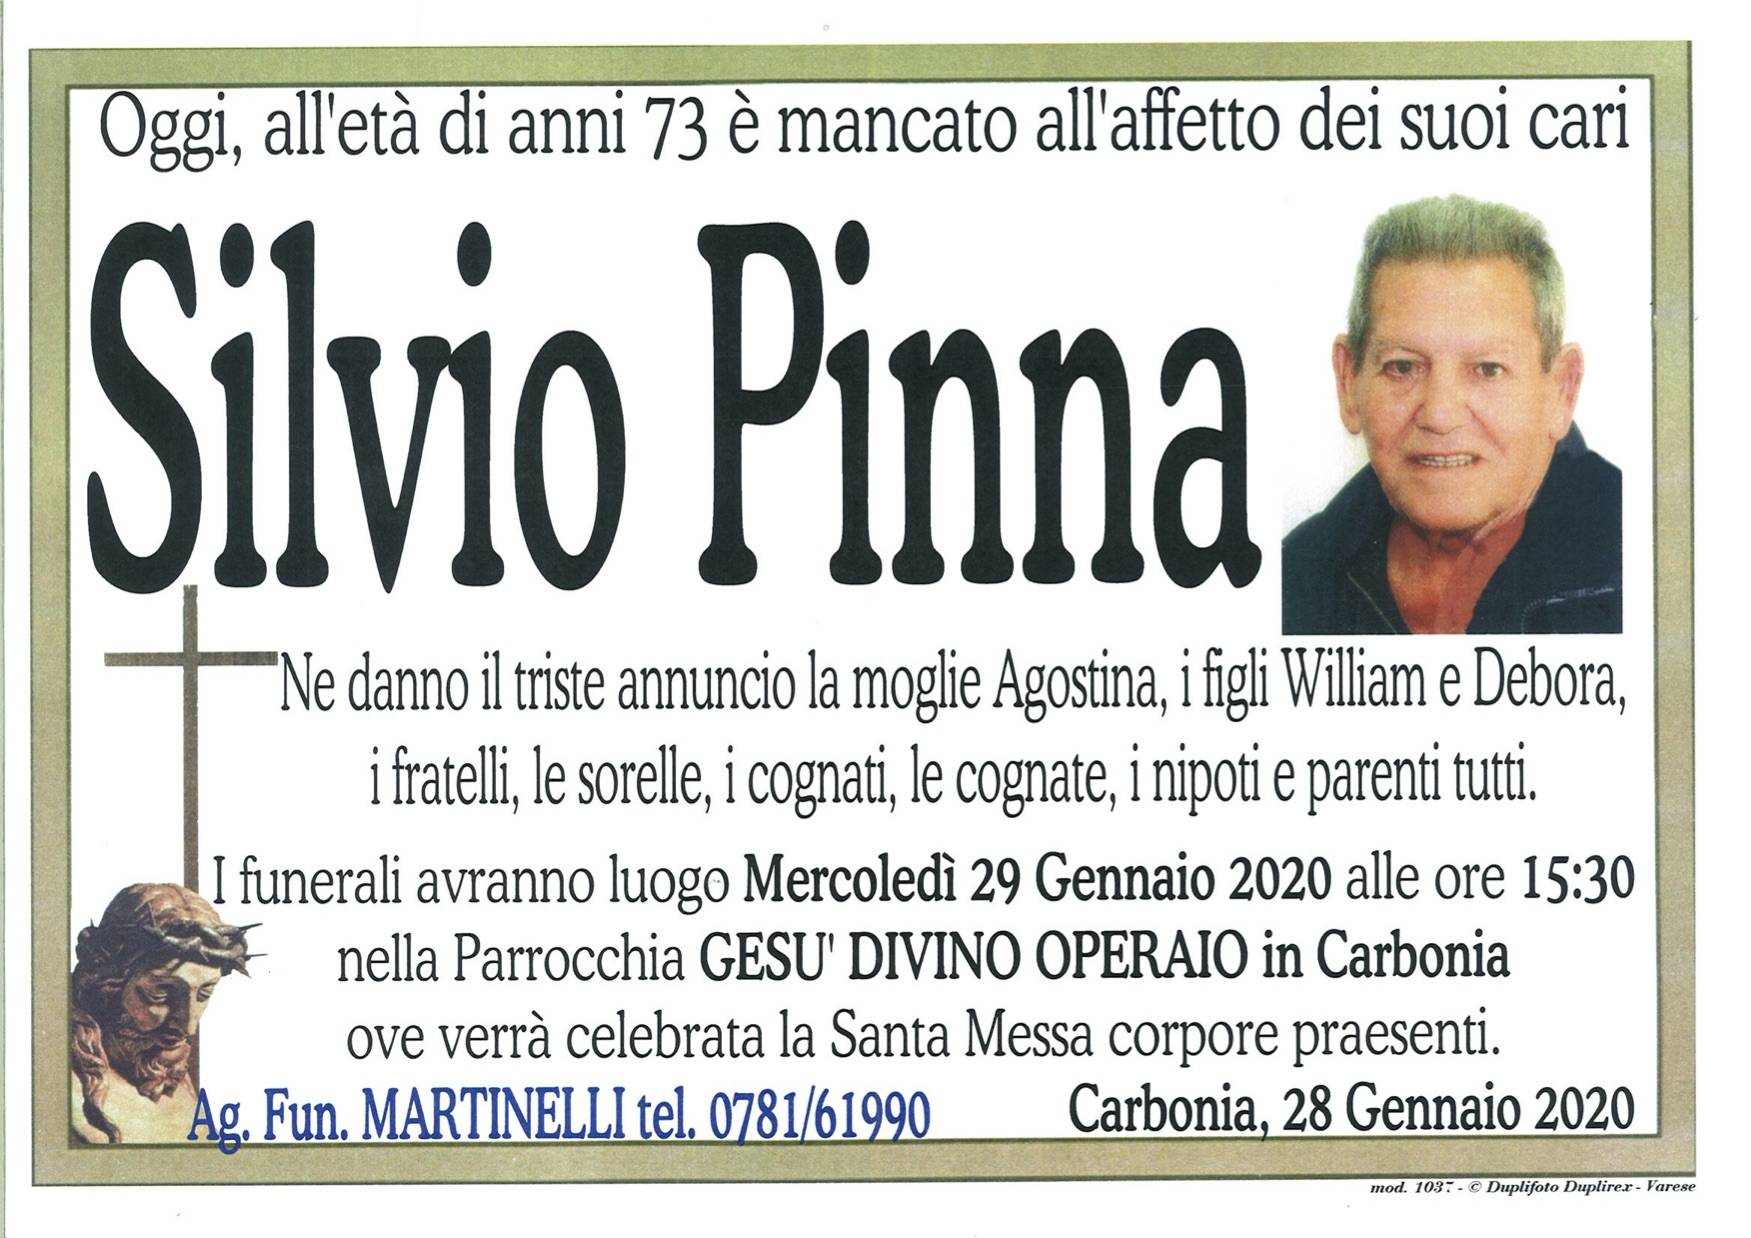 Silvio Pinna